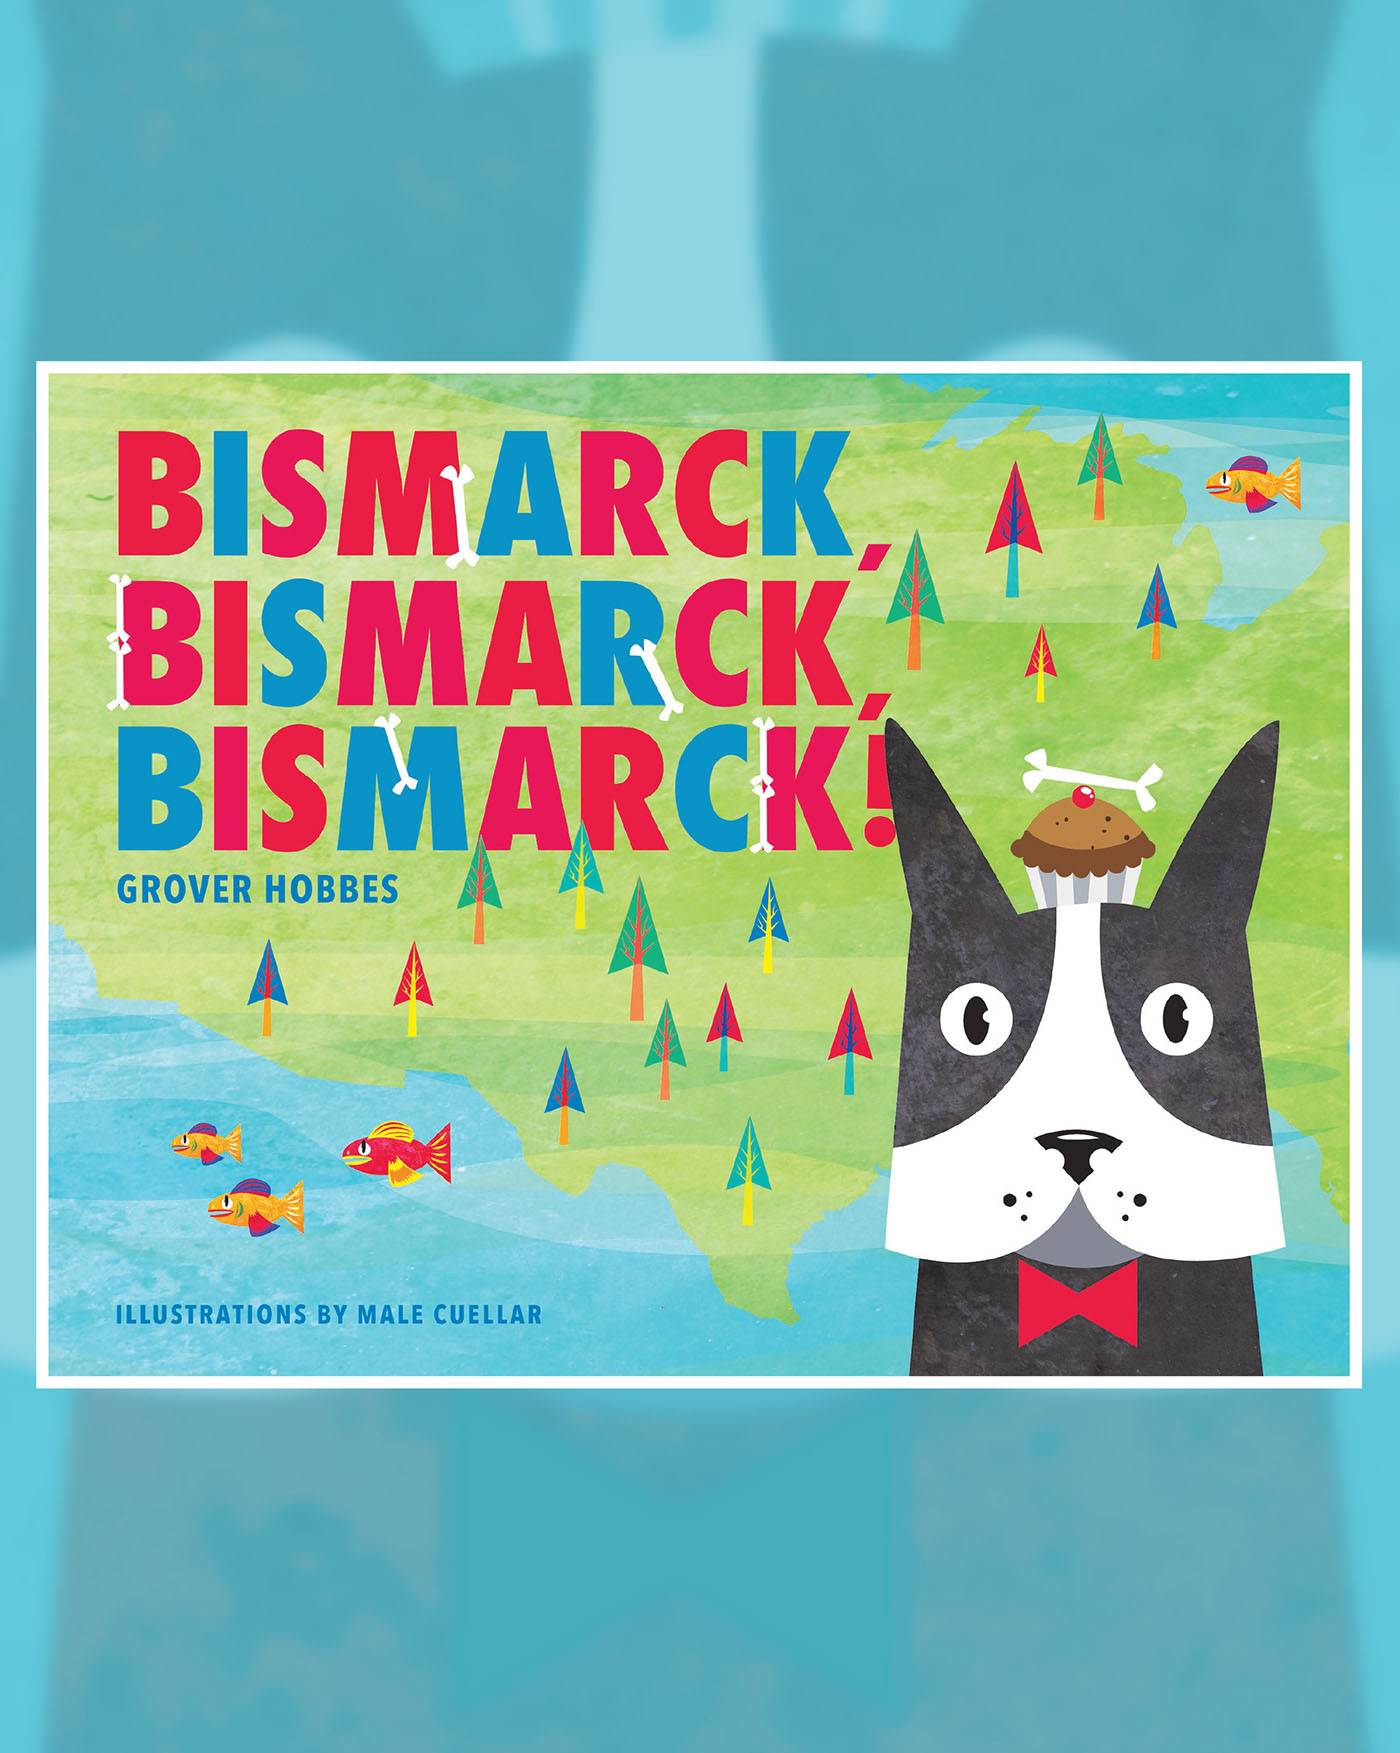 Bismarck Bismarck Bismarck Cover Image